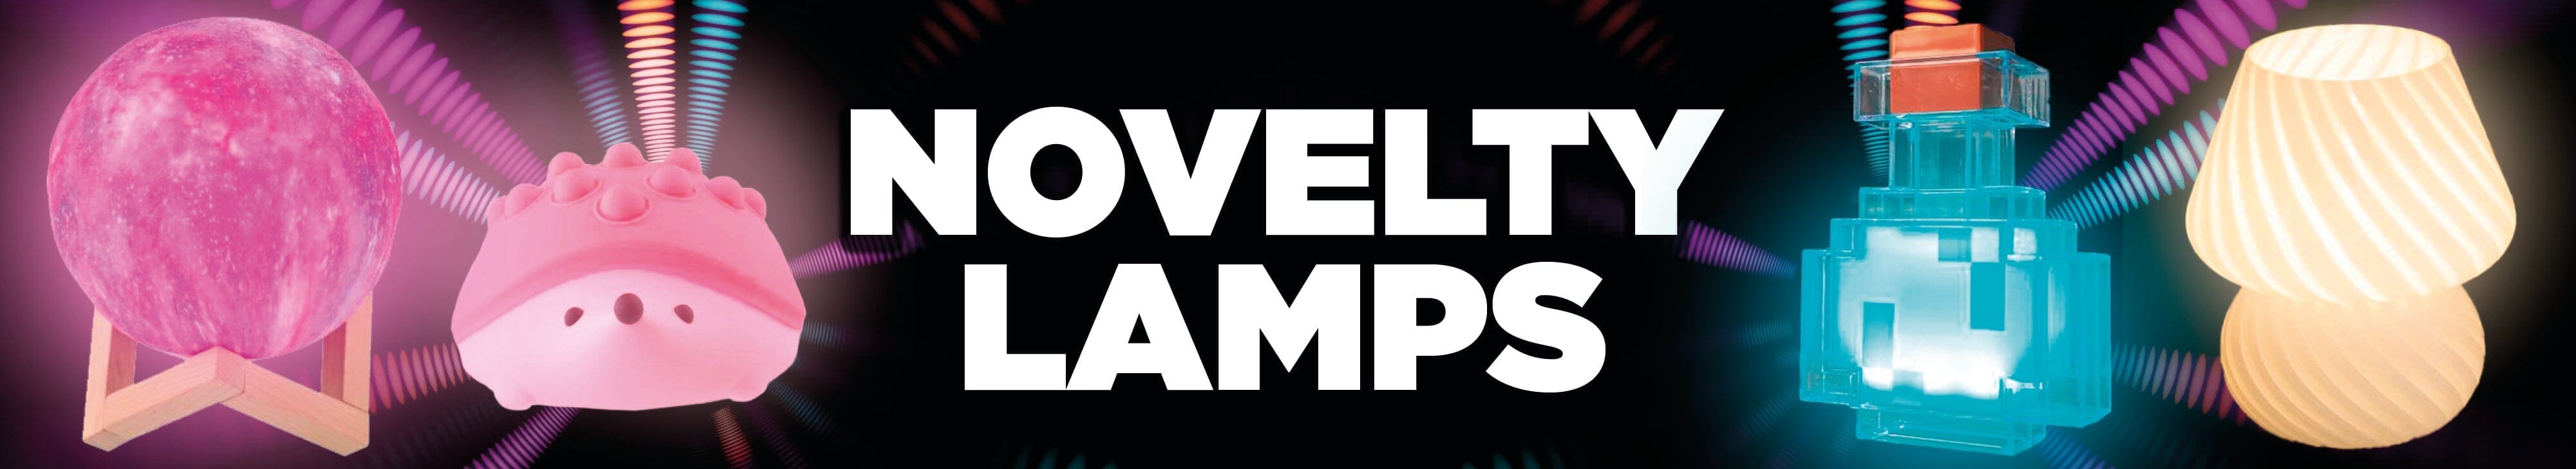 Novelty Lamps